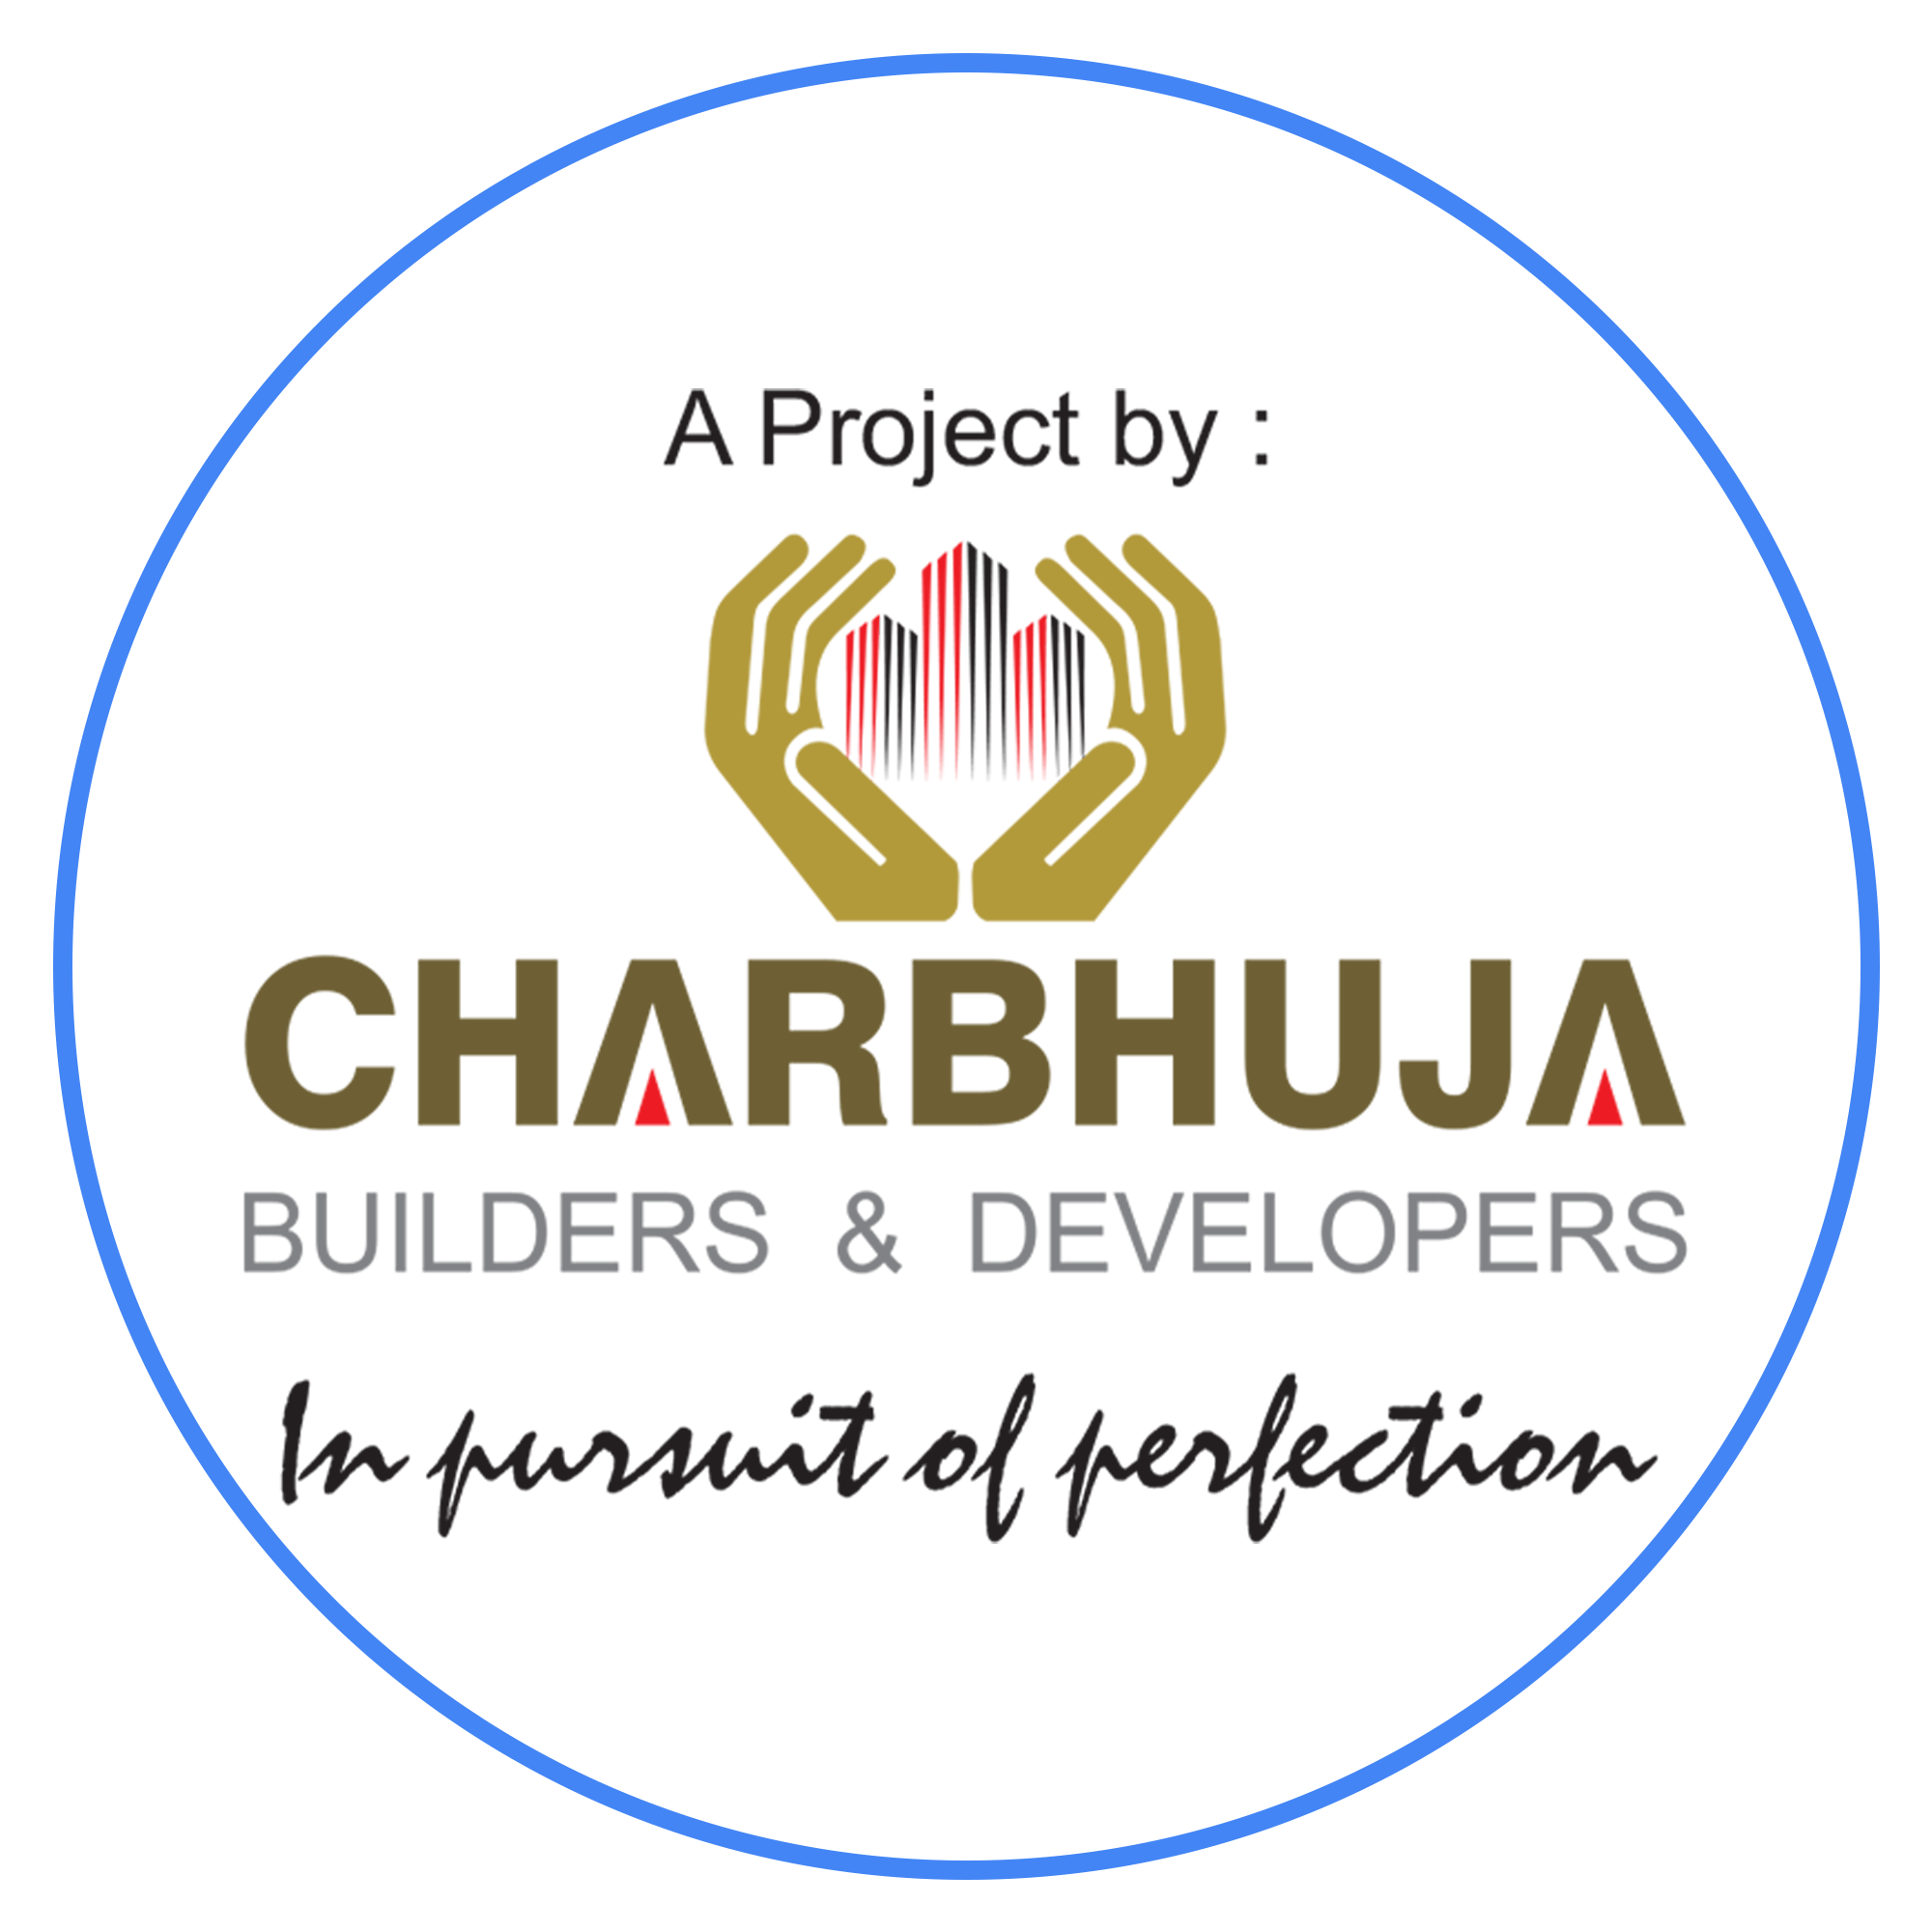 Charbhuja Builder